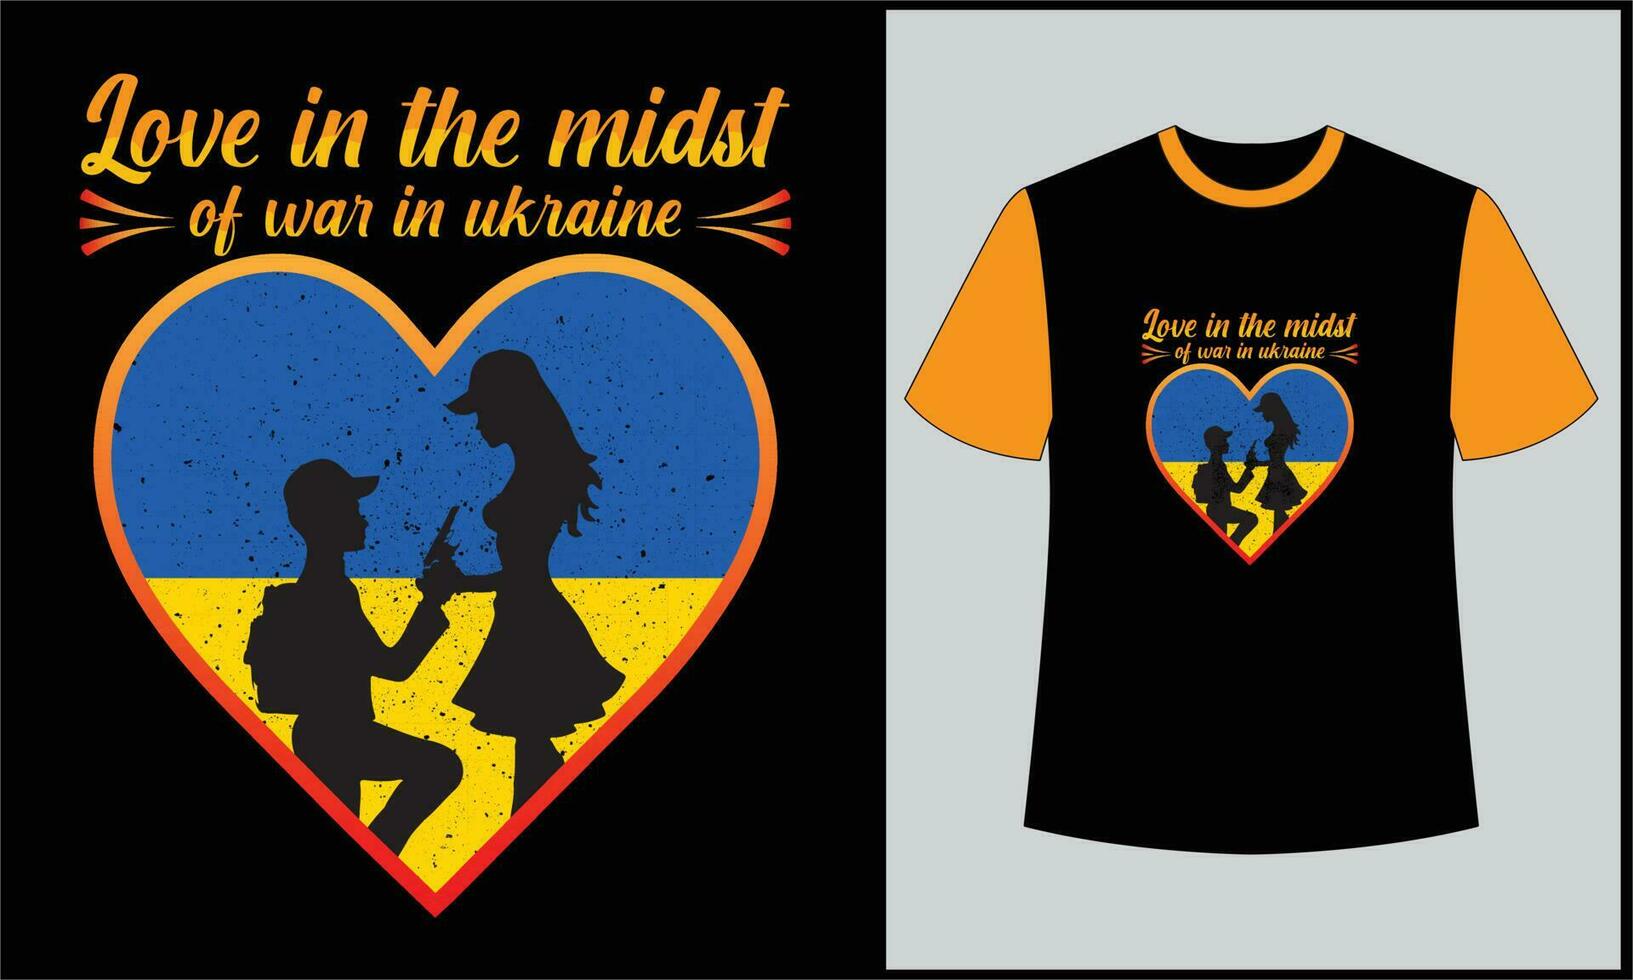 retro vintage ukraine love in midst war illustration vector t shirt design